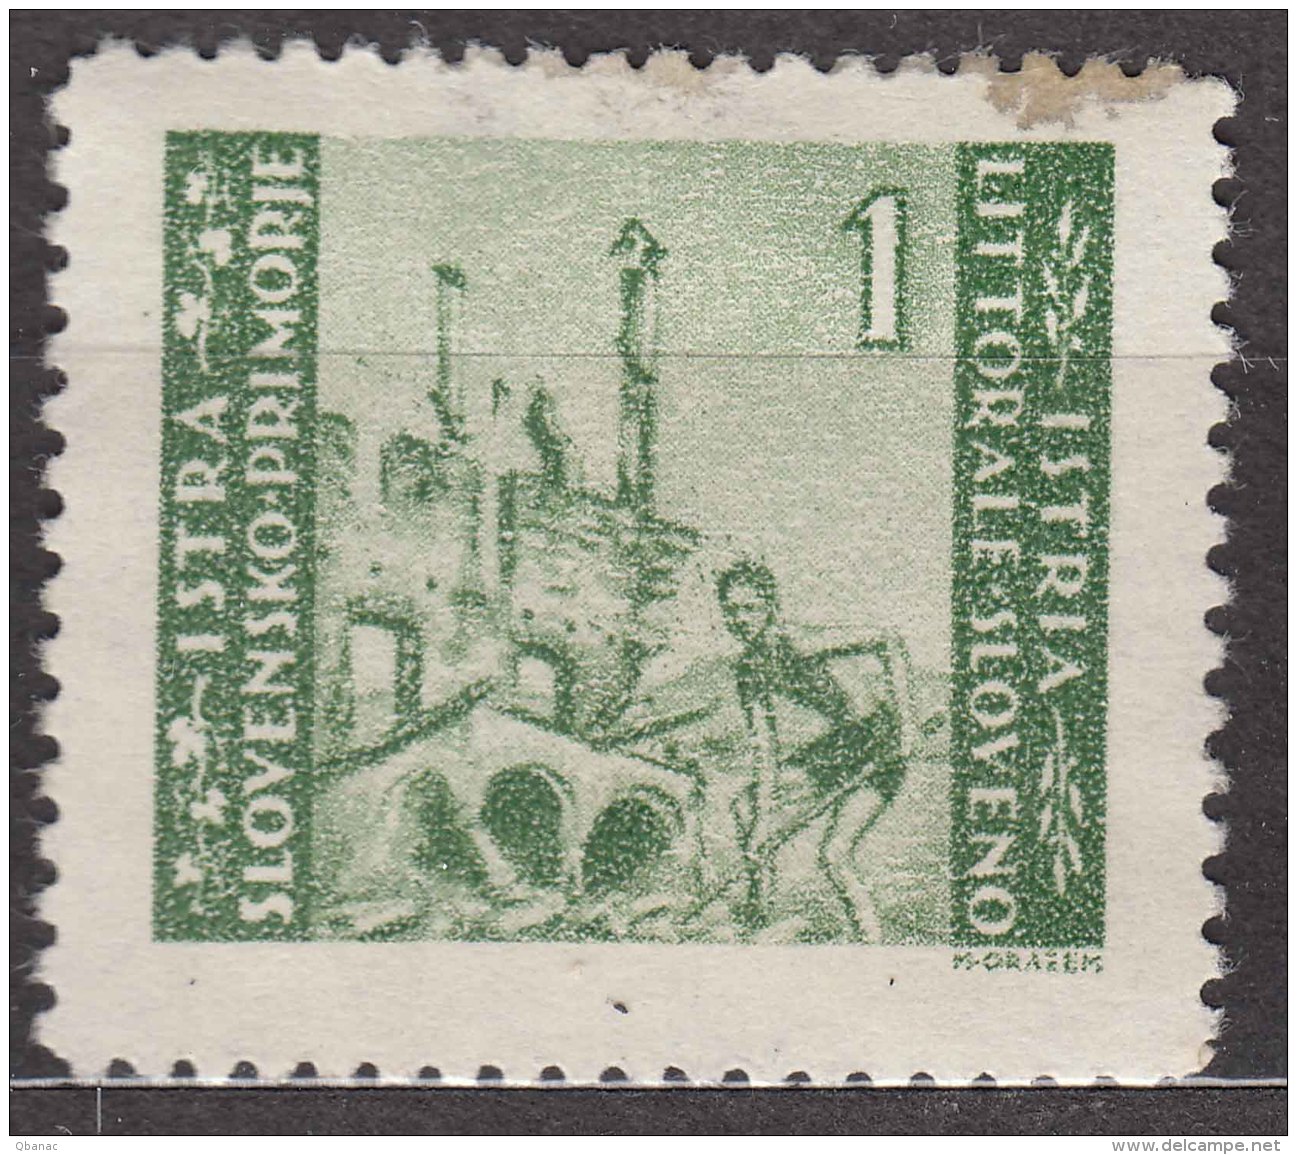 Istria Litorale Yugoslavia Occupation, 1946 Sassone#53 Mint Hinged - Yugoslavian Occ.: Istria